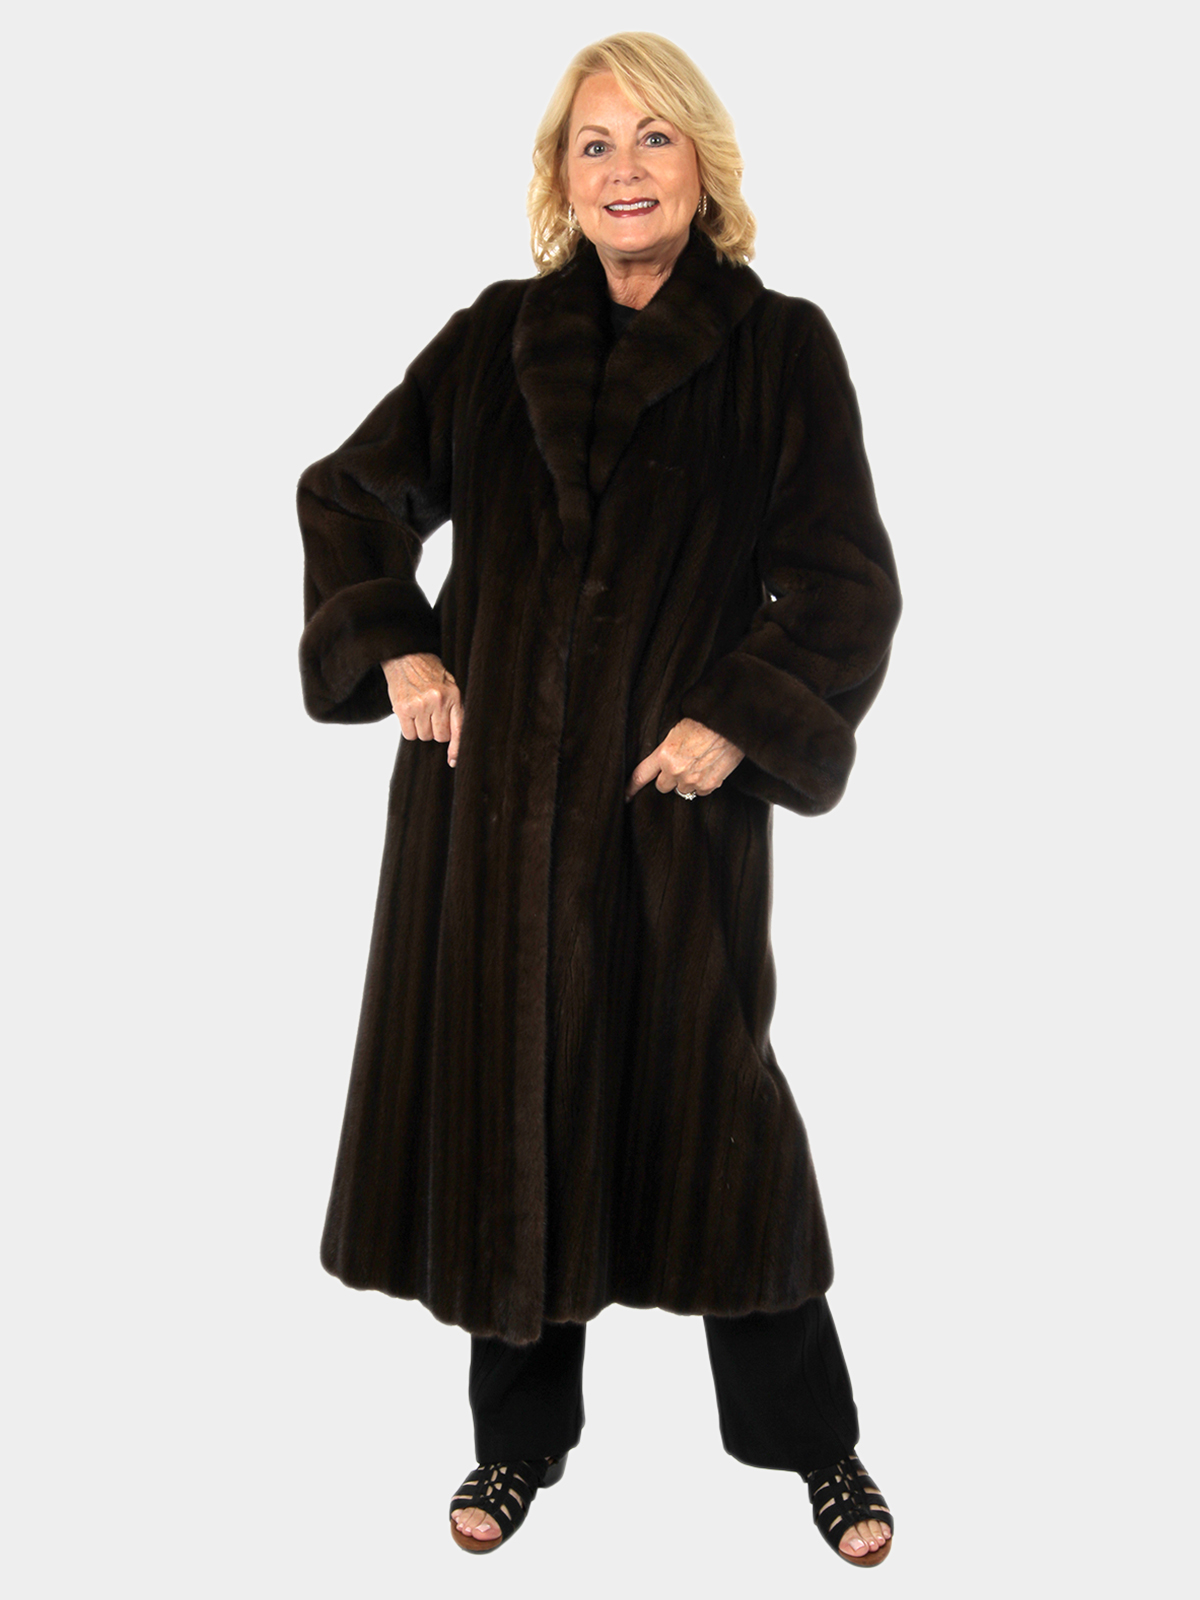 Mahogany Female Mink Fur Coat - Women's Fur Coat - Large | Estate Furs